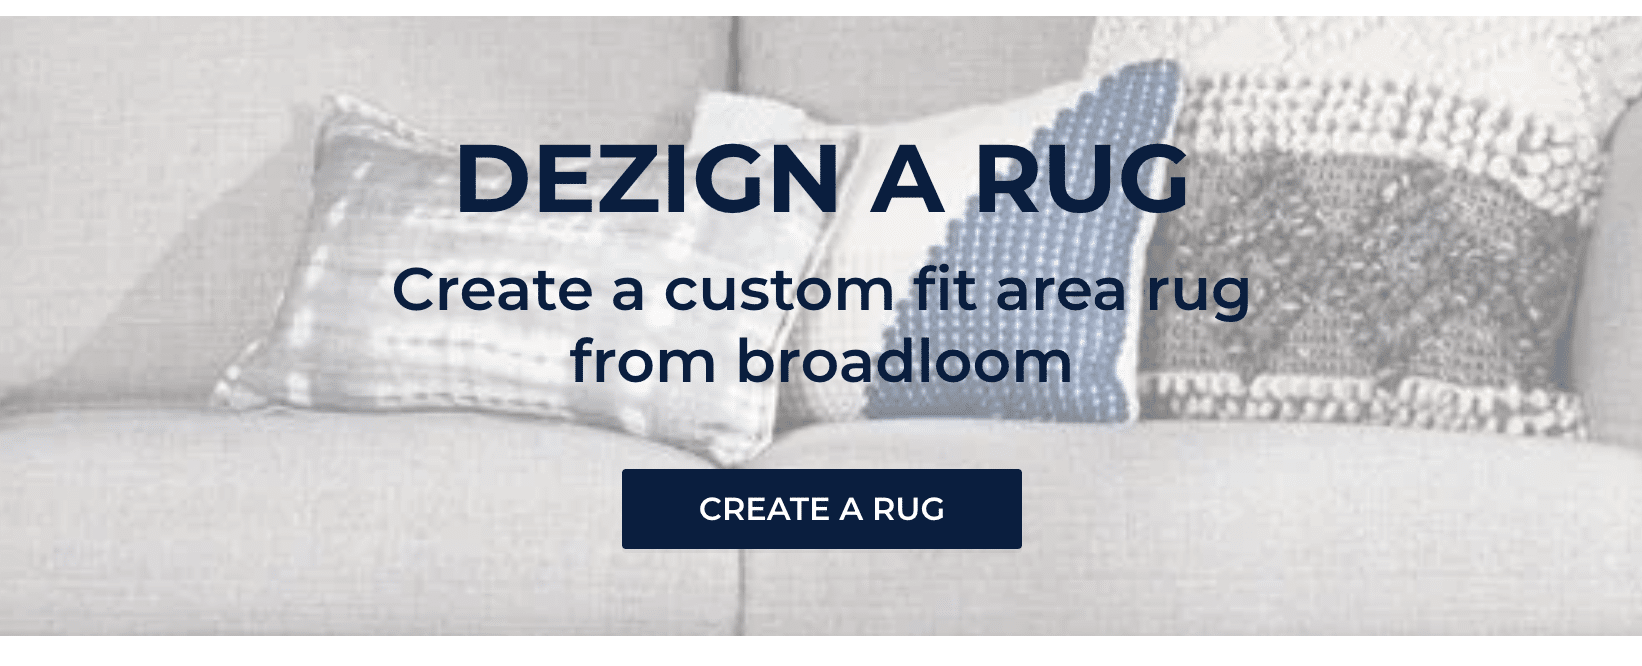 dezigned - Create a custom fit area rug from broadloom